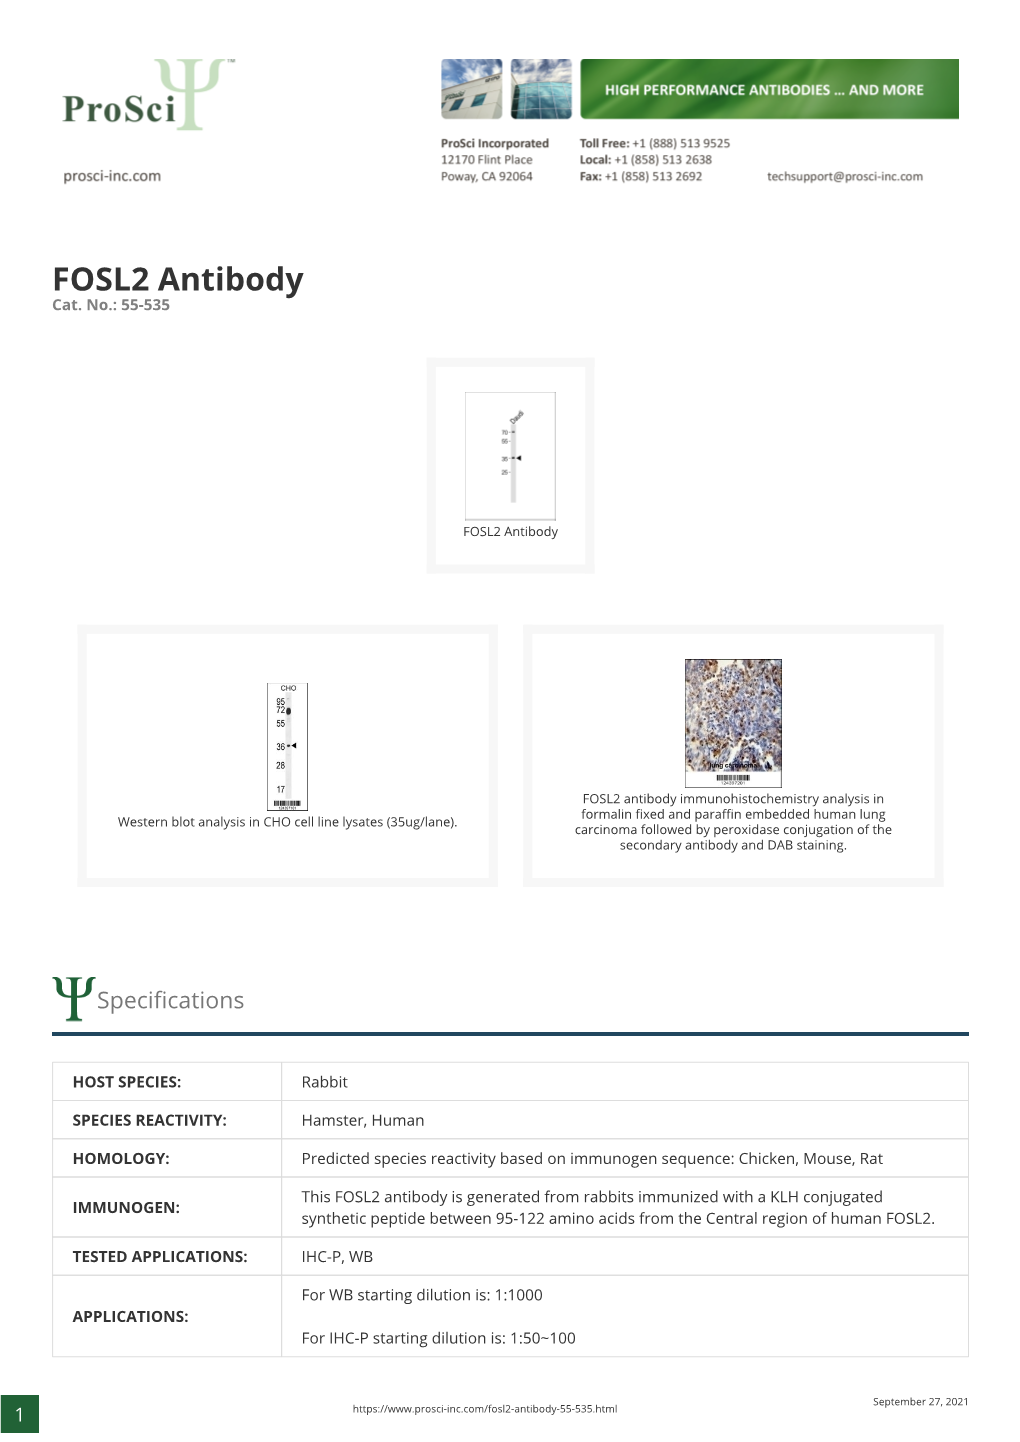 FOSL2 Antibody Cat